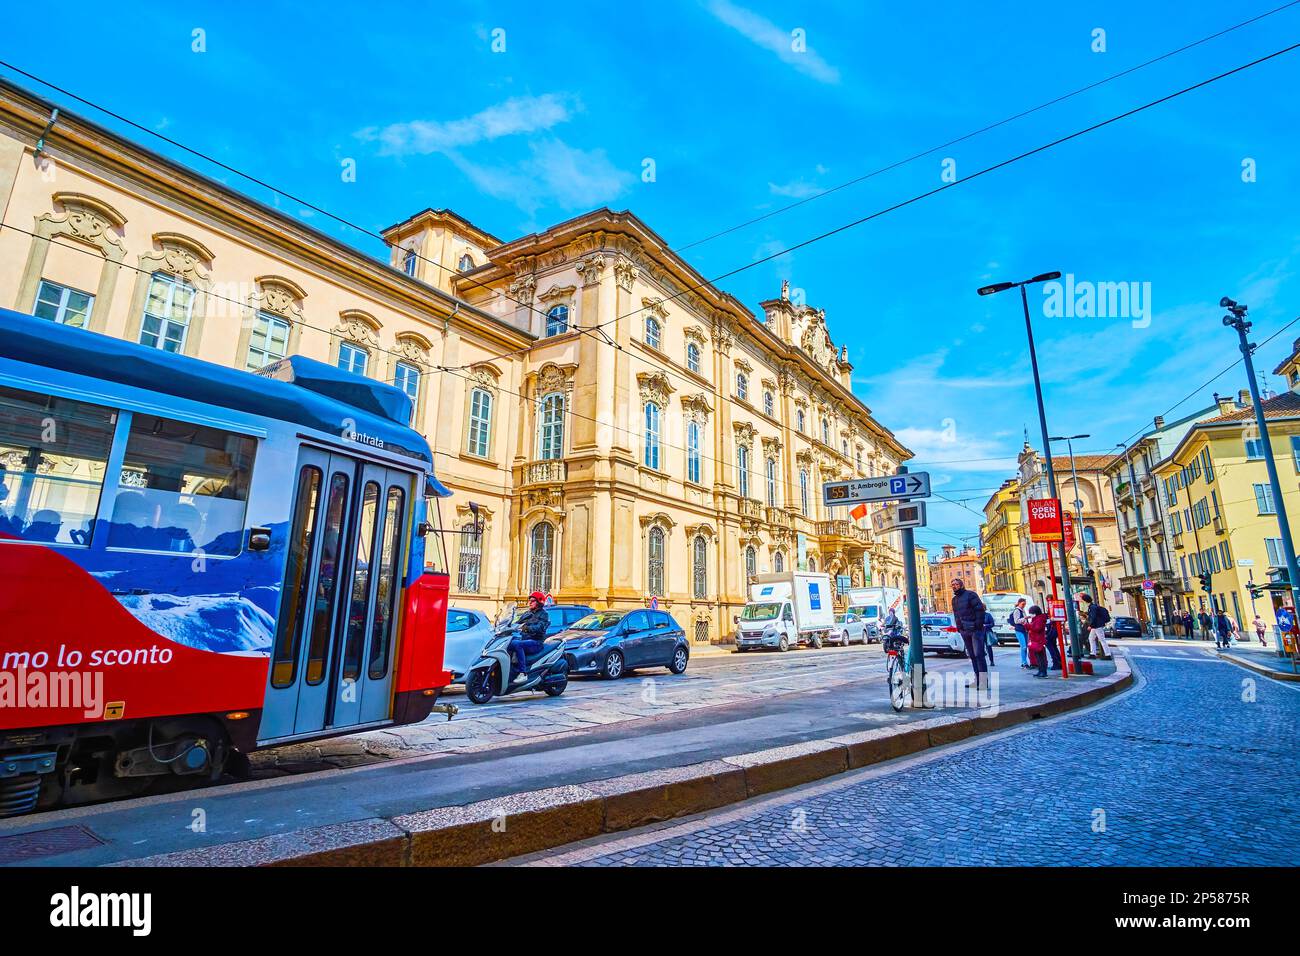 MILAN, ITALY - APRIL 11, 2022: Urban scene on Corso Magenta street with ridding tram, on April 11 in Milan, Italy Stock Photo